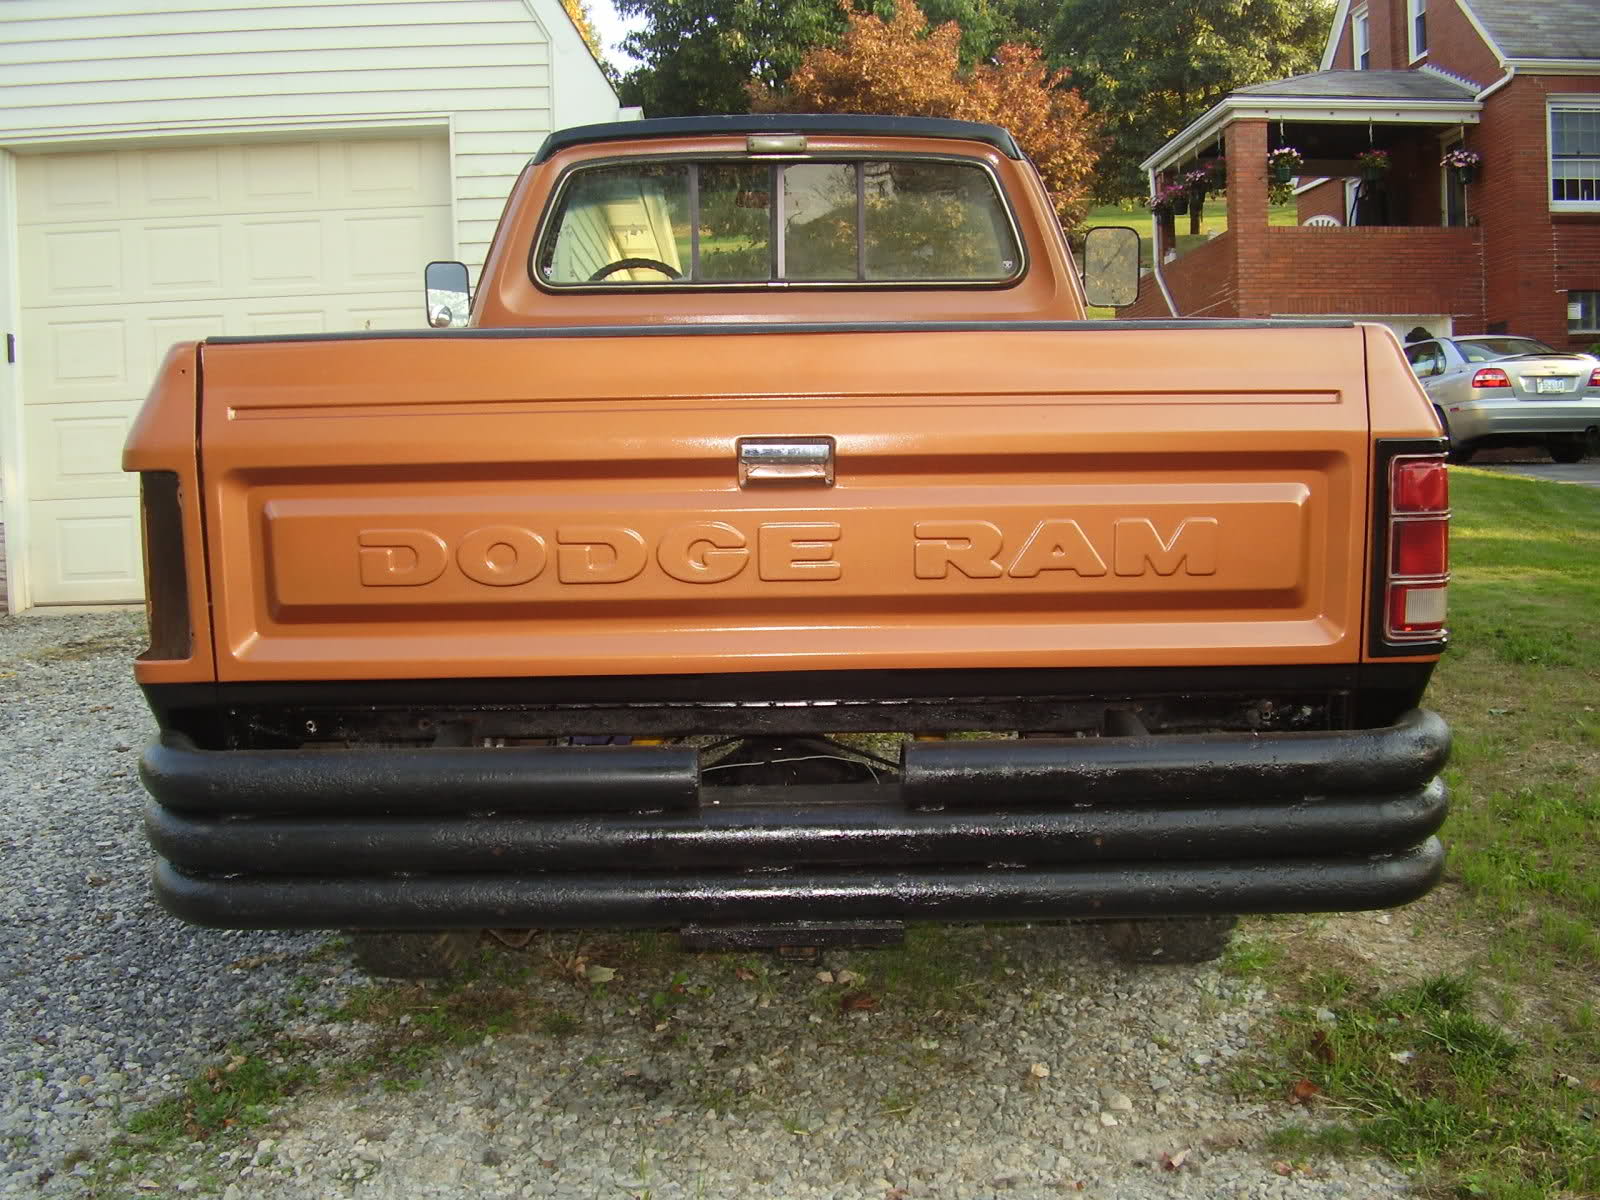 Re: My first truck/school project 1985 dodge ram prospector